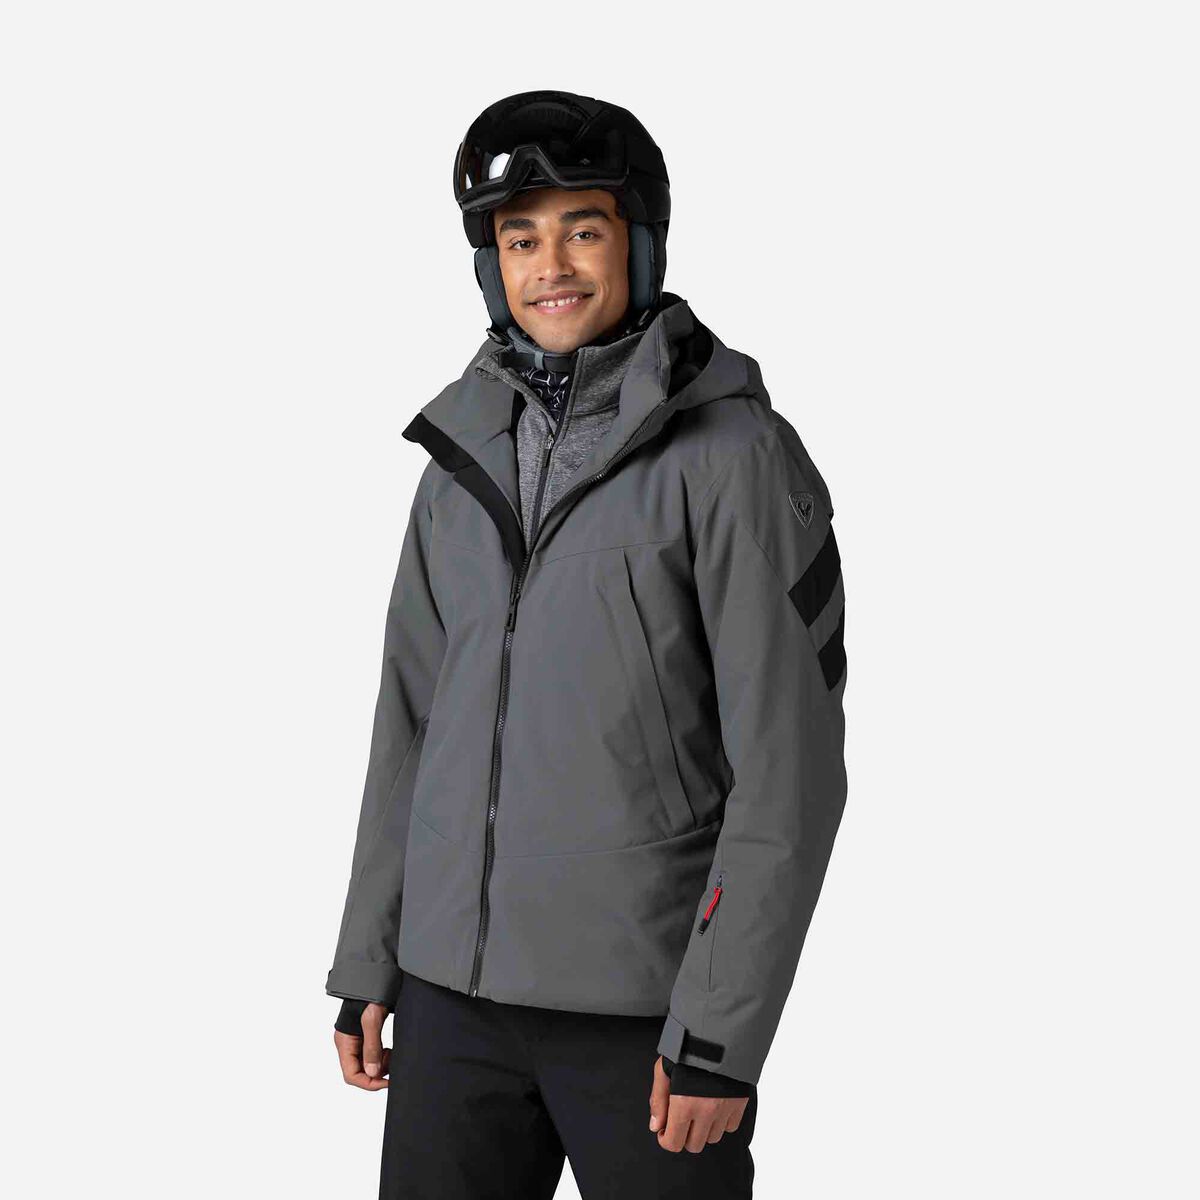 Men's Controle Ski Jacket